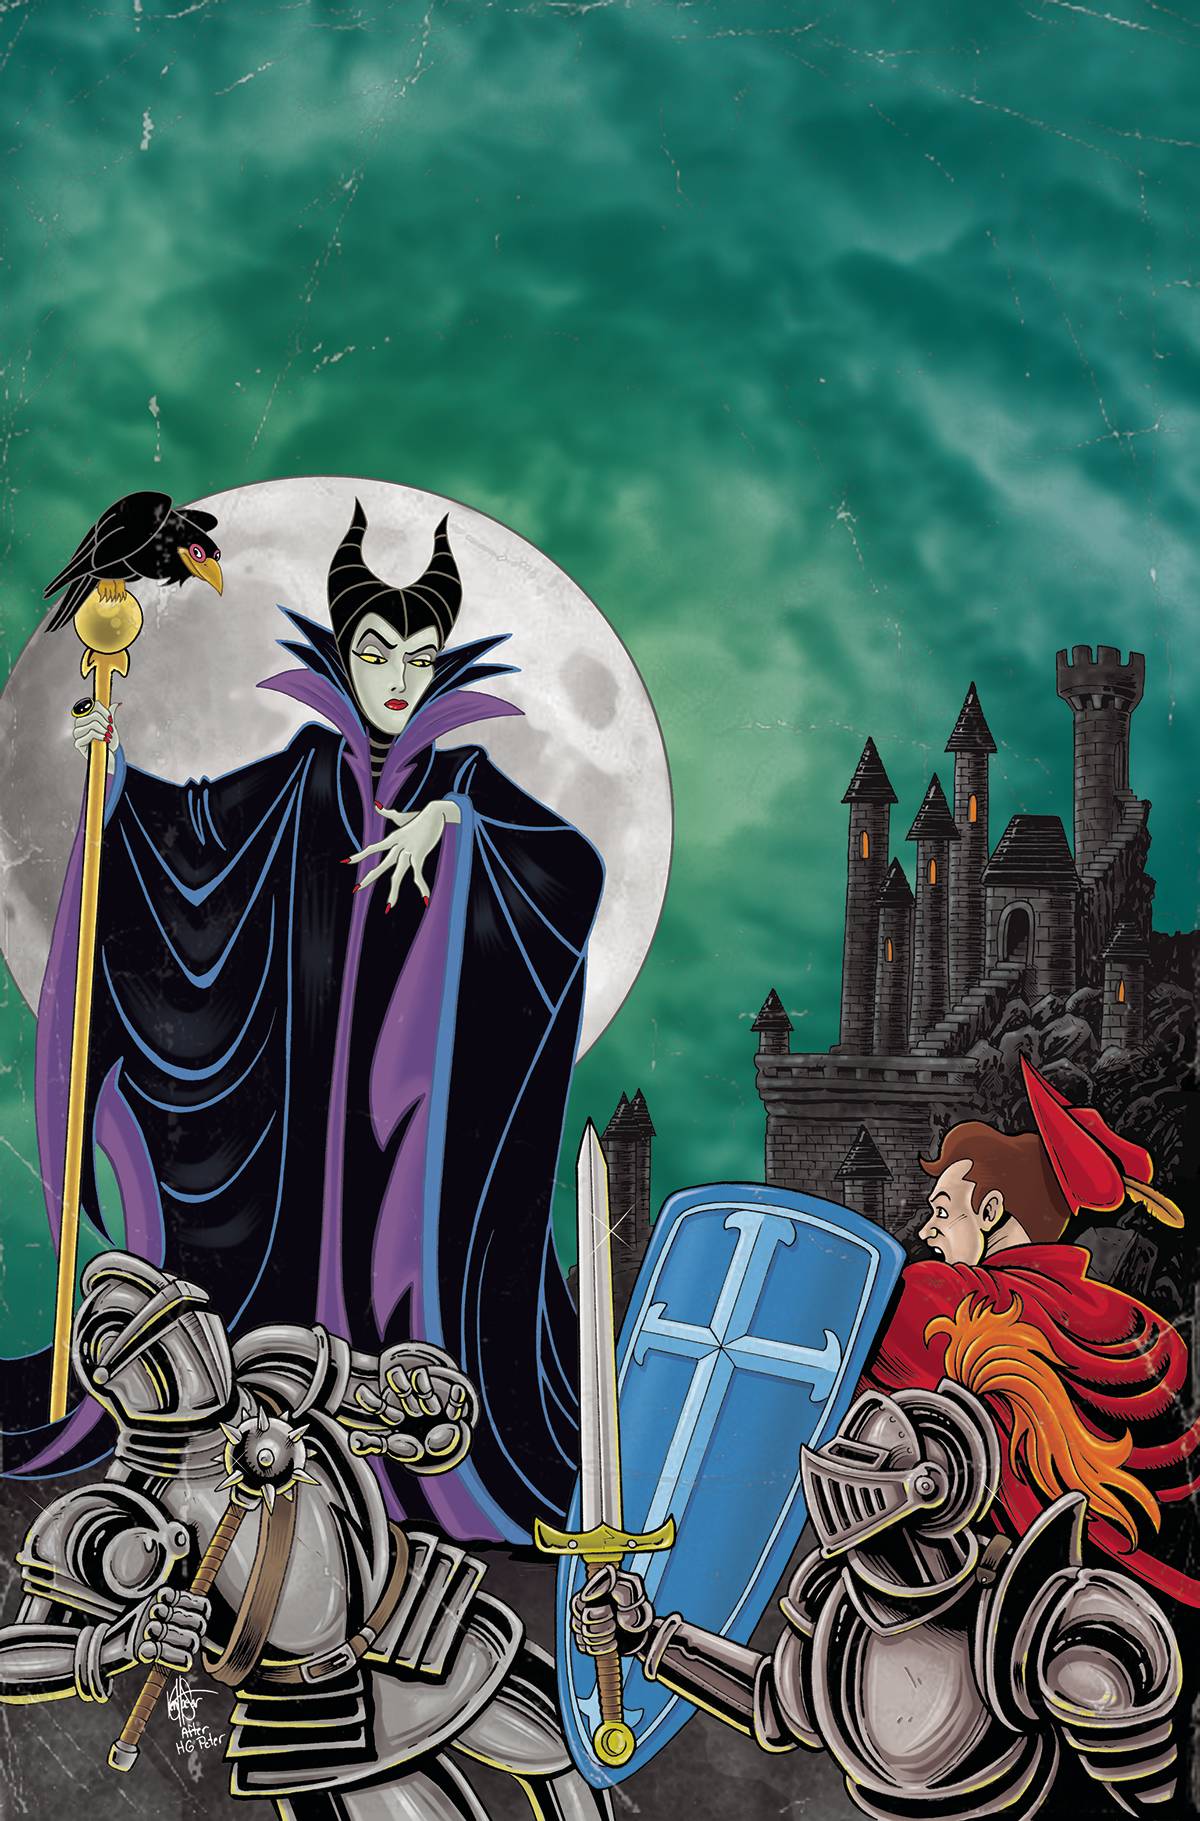 Disney Villains Maleficent #1 Cover Zf 10 Copy Last Call Incentive Haeser